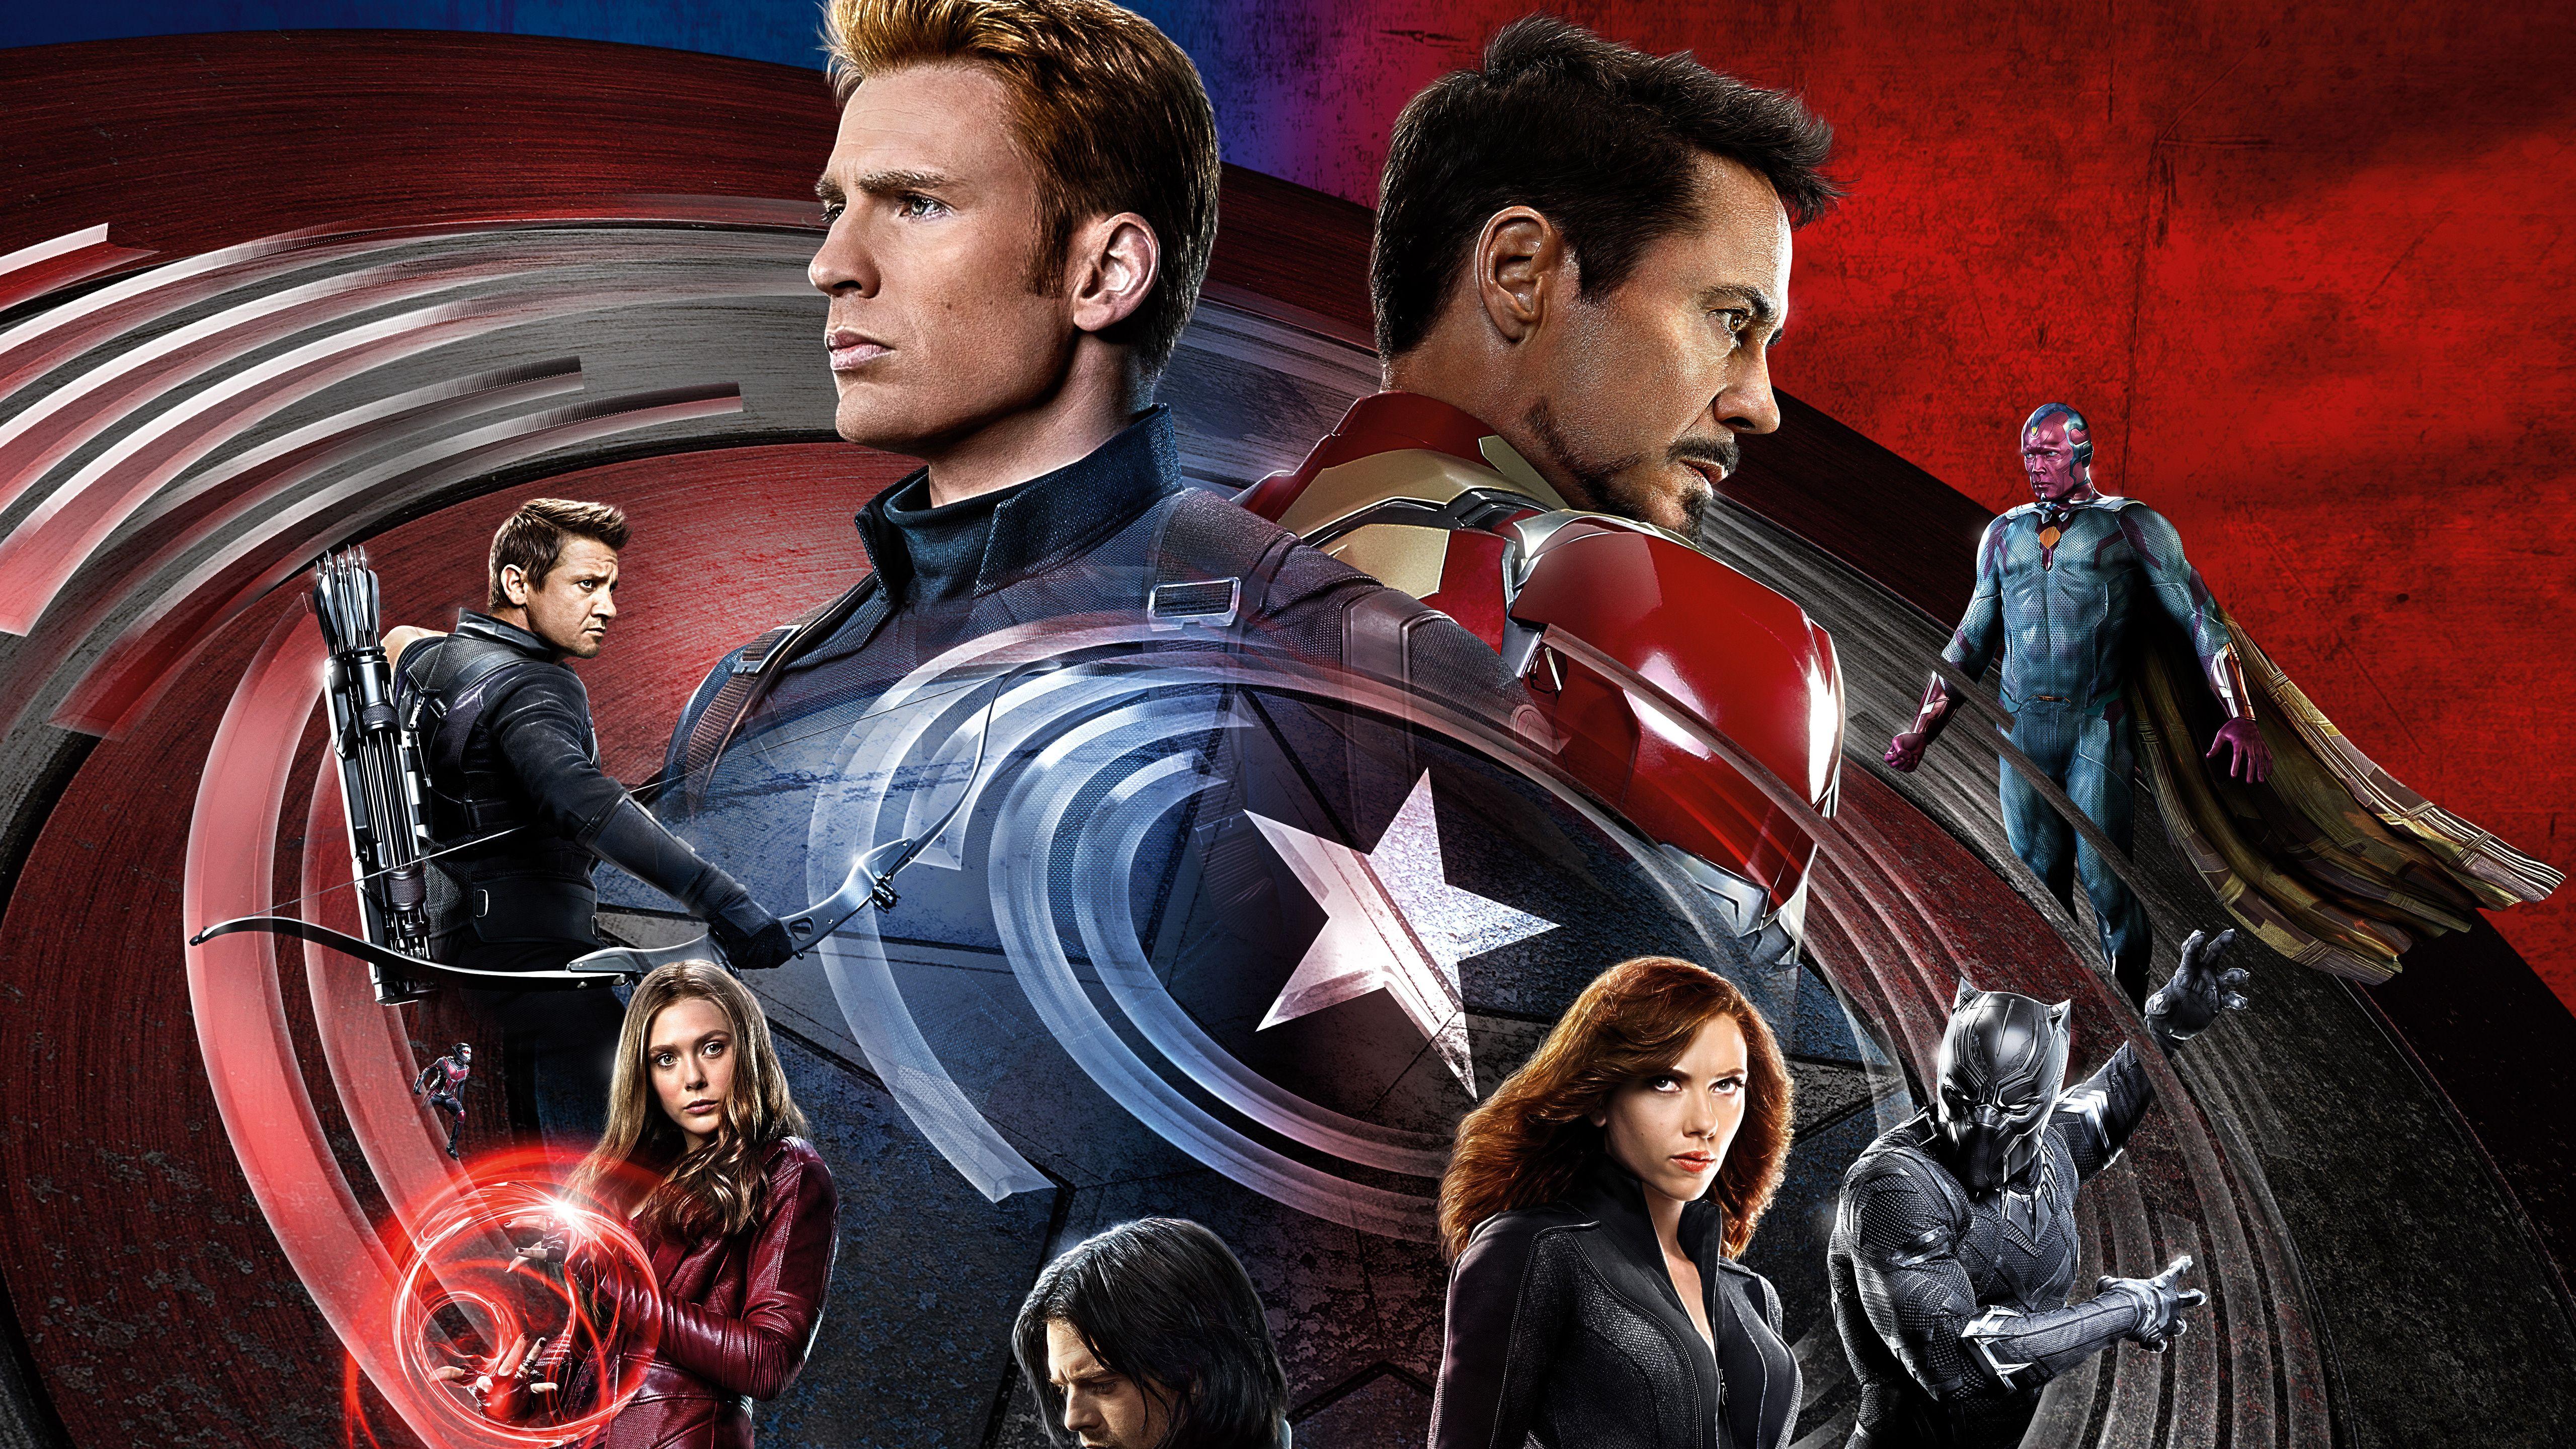 Wallpaper Captain America, Iron Man, Black Widow, Civil War, Movies